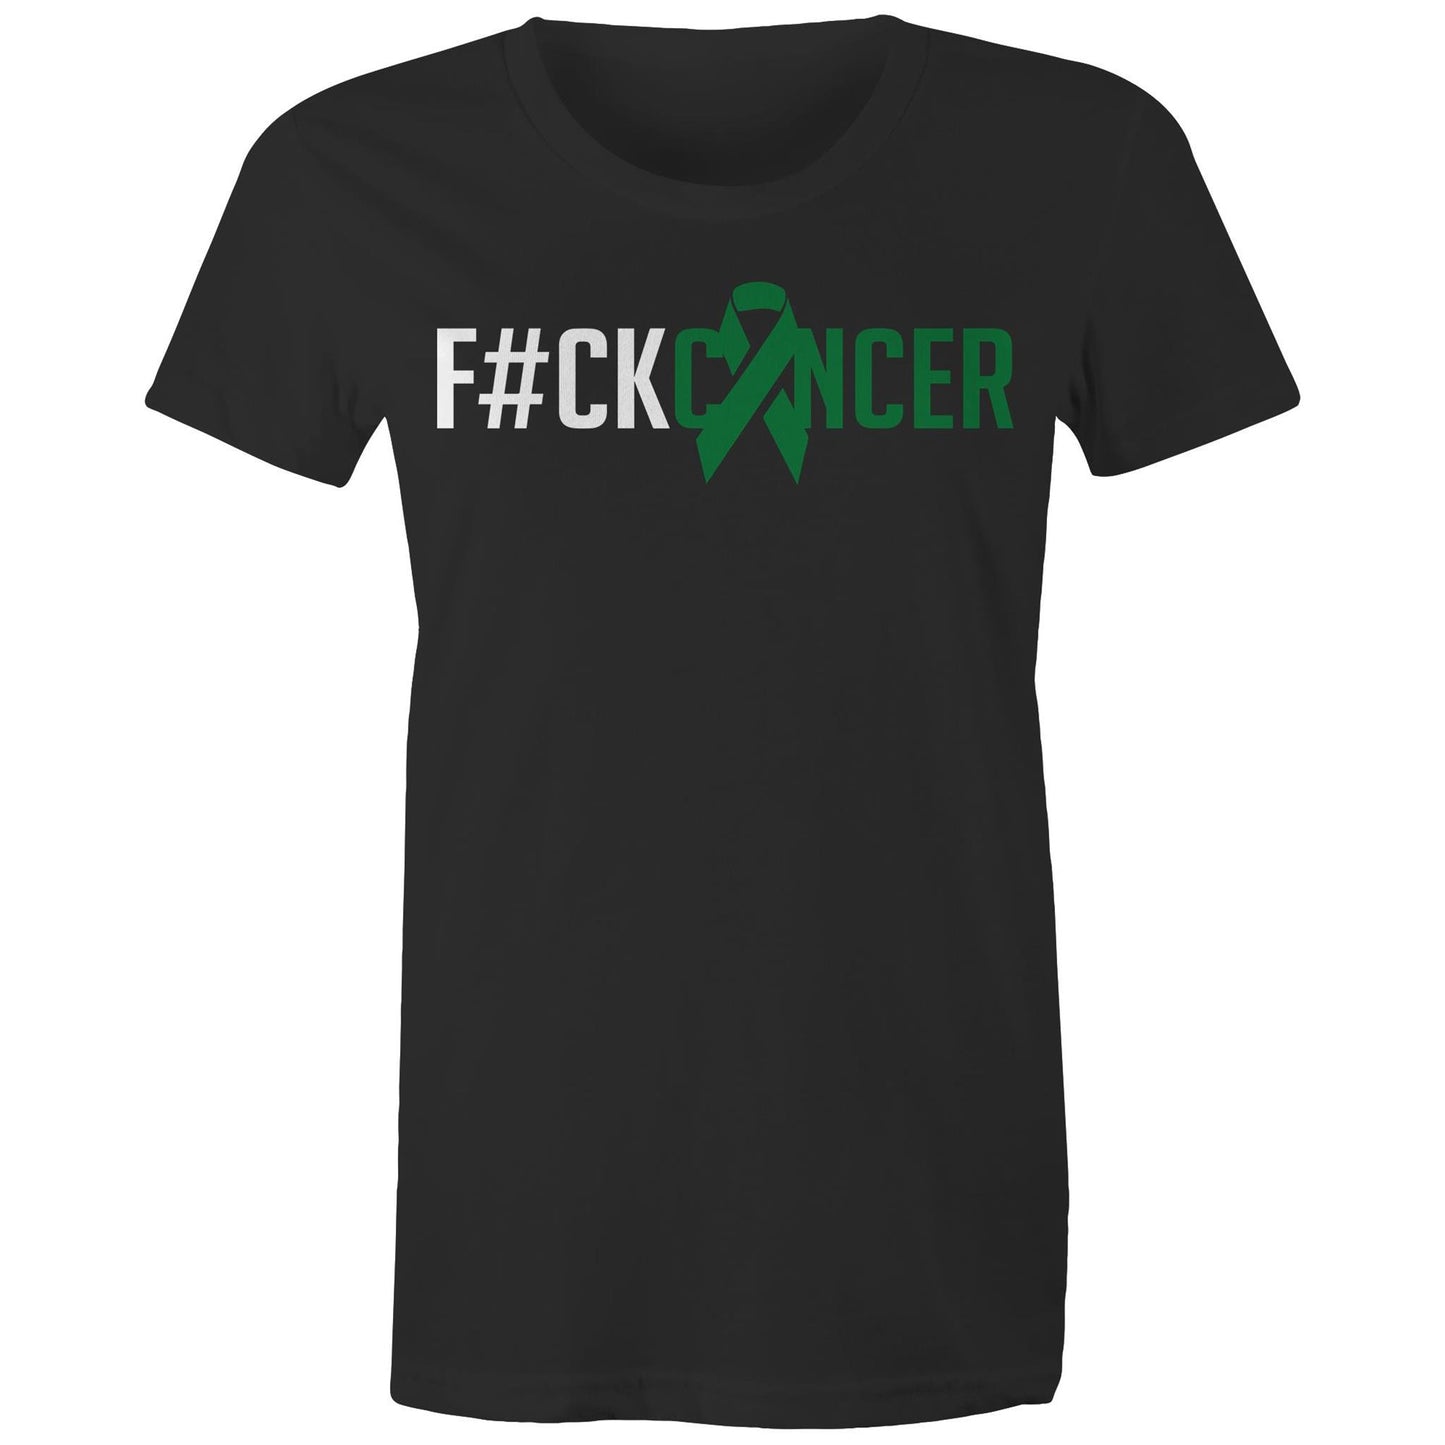 F#CK Liver Cancer Women's Tee